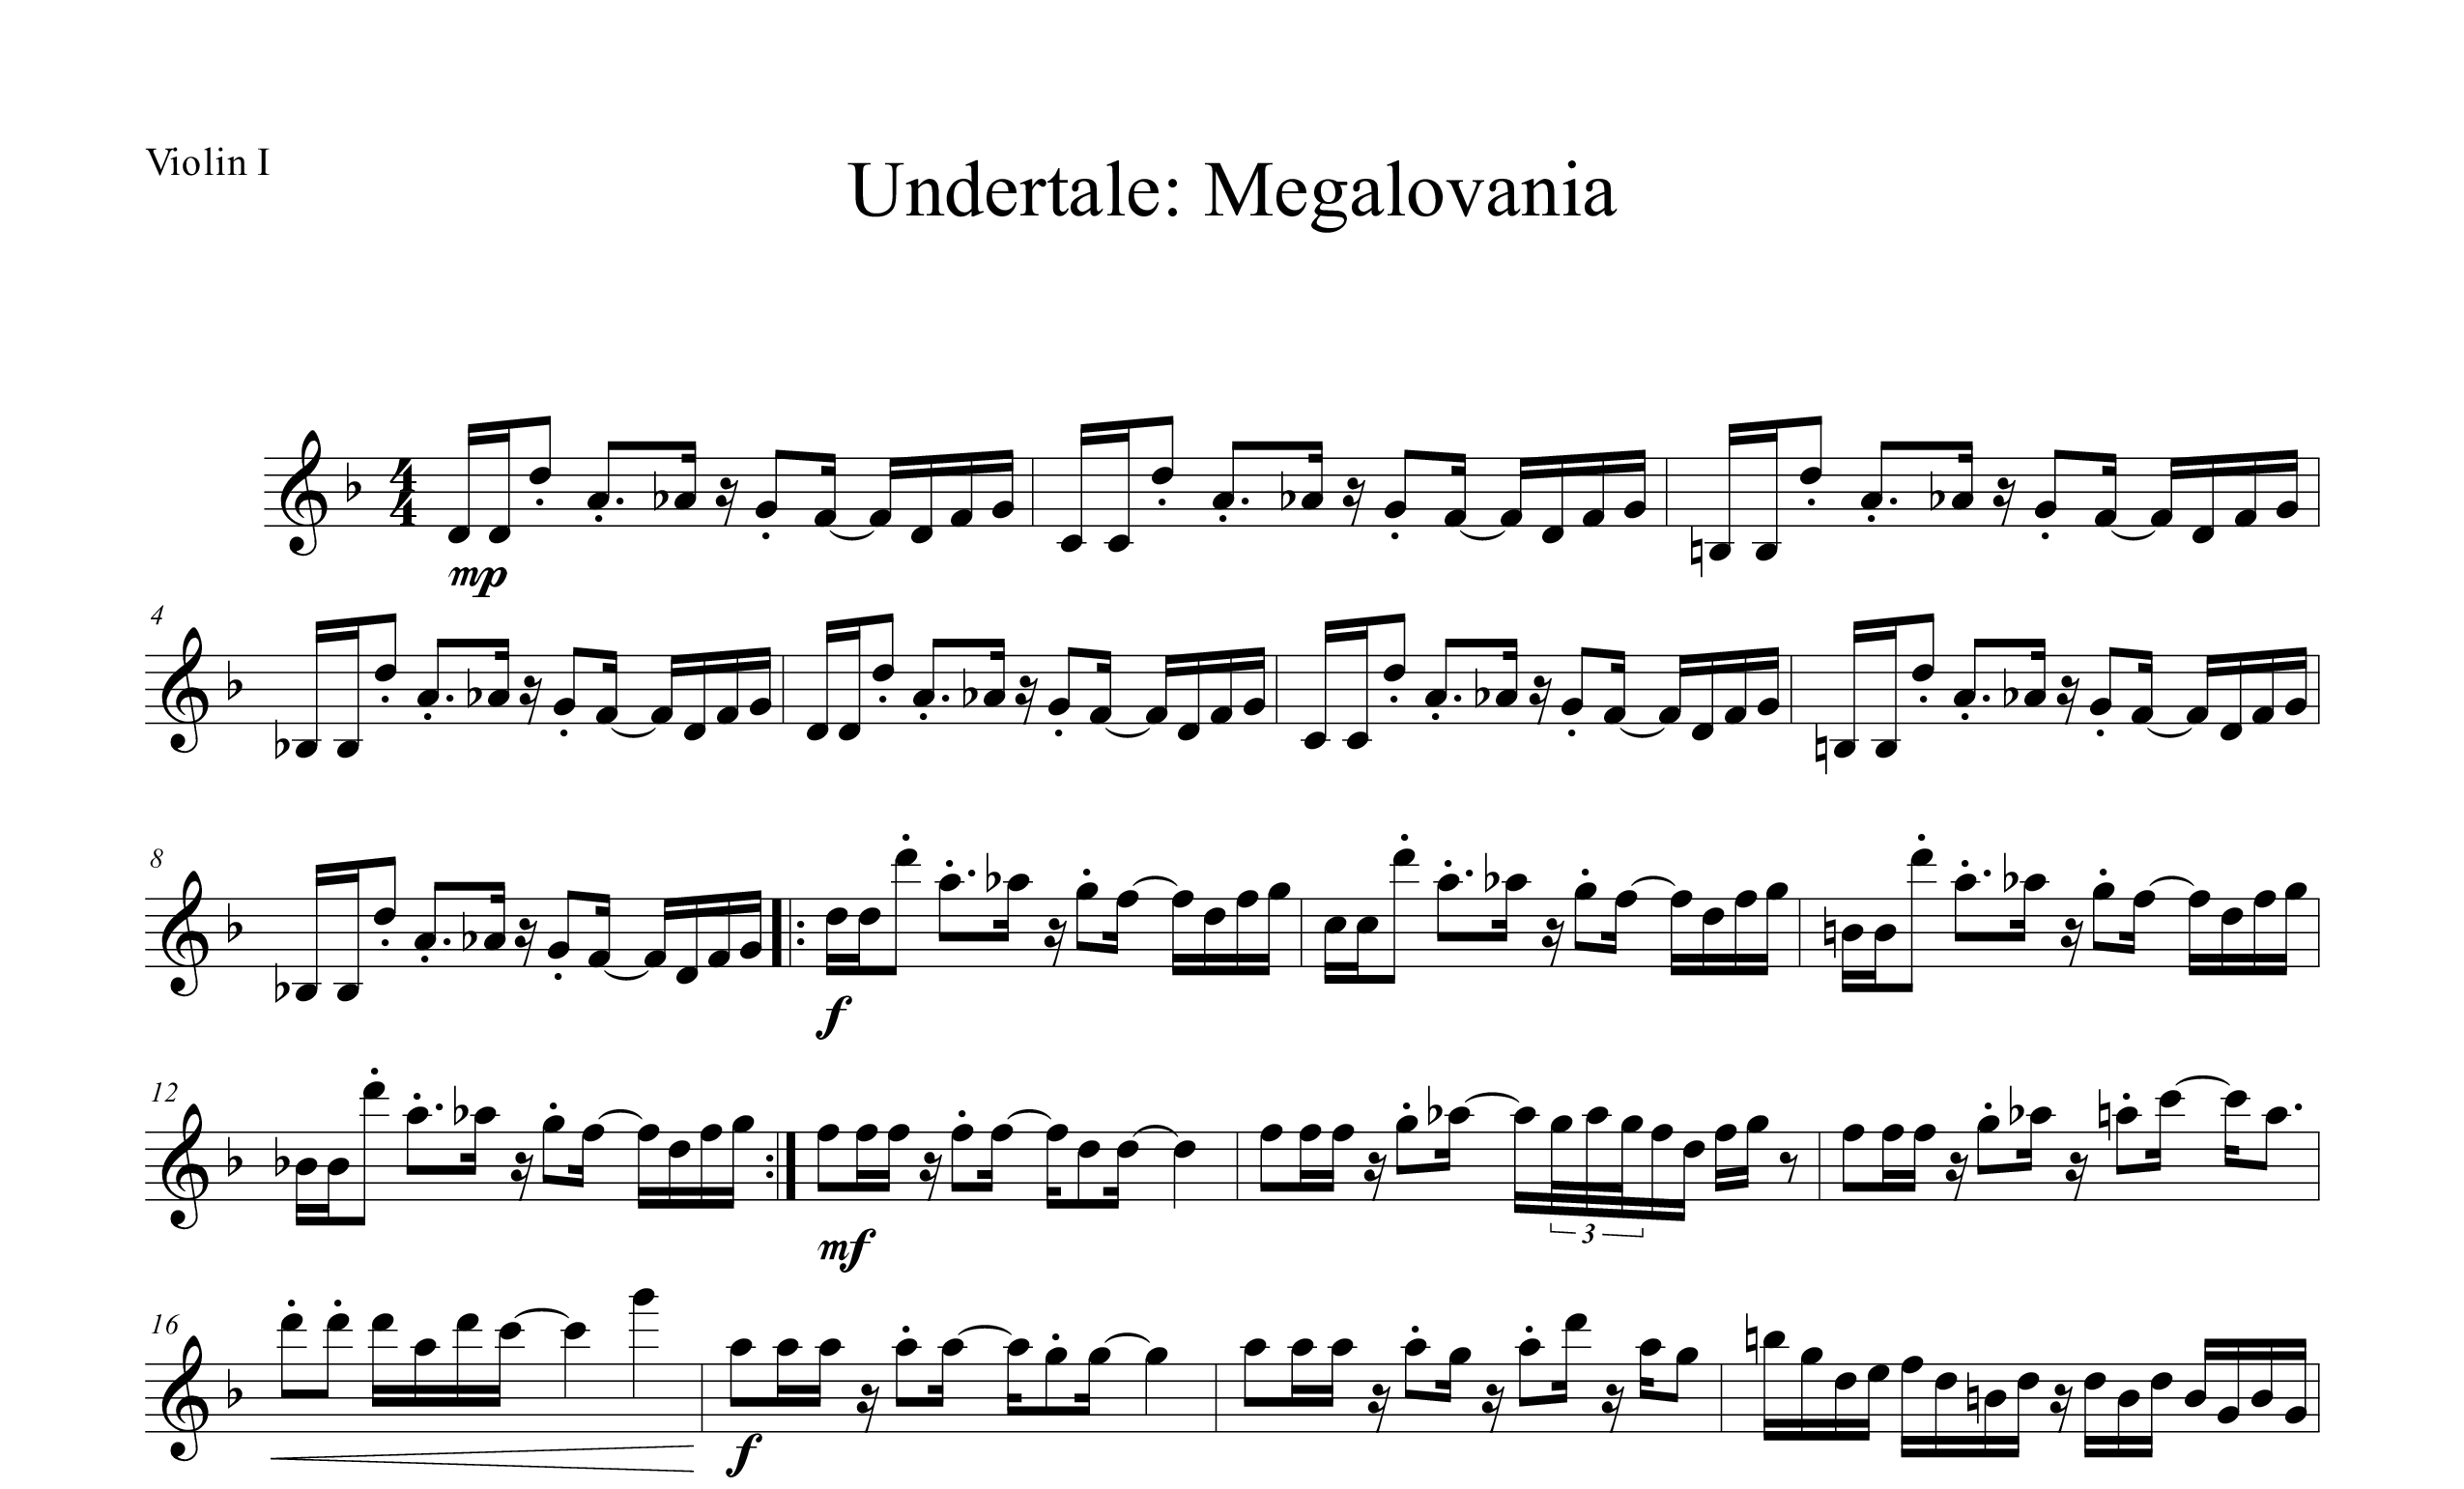 Undertale - Megalovania Score